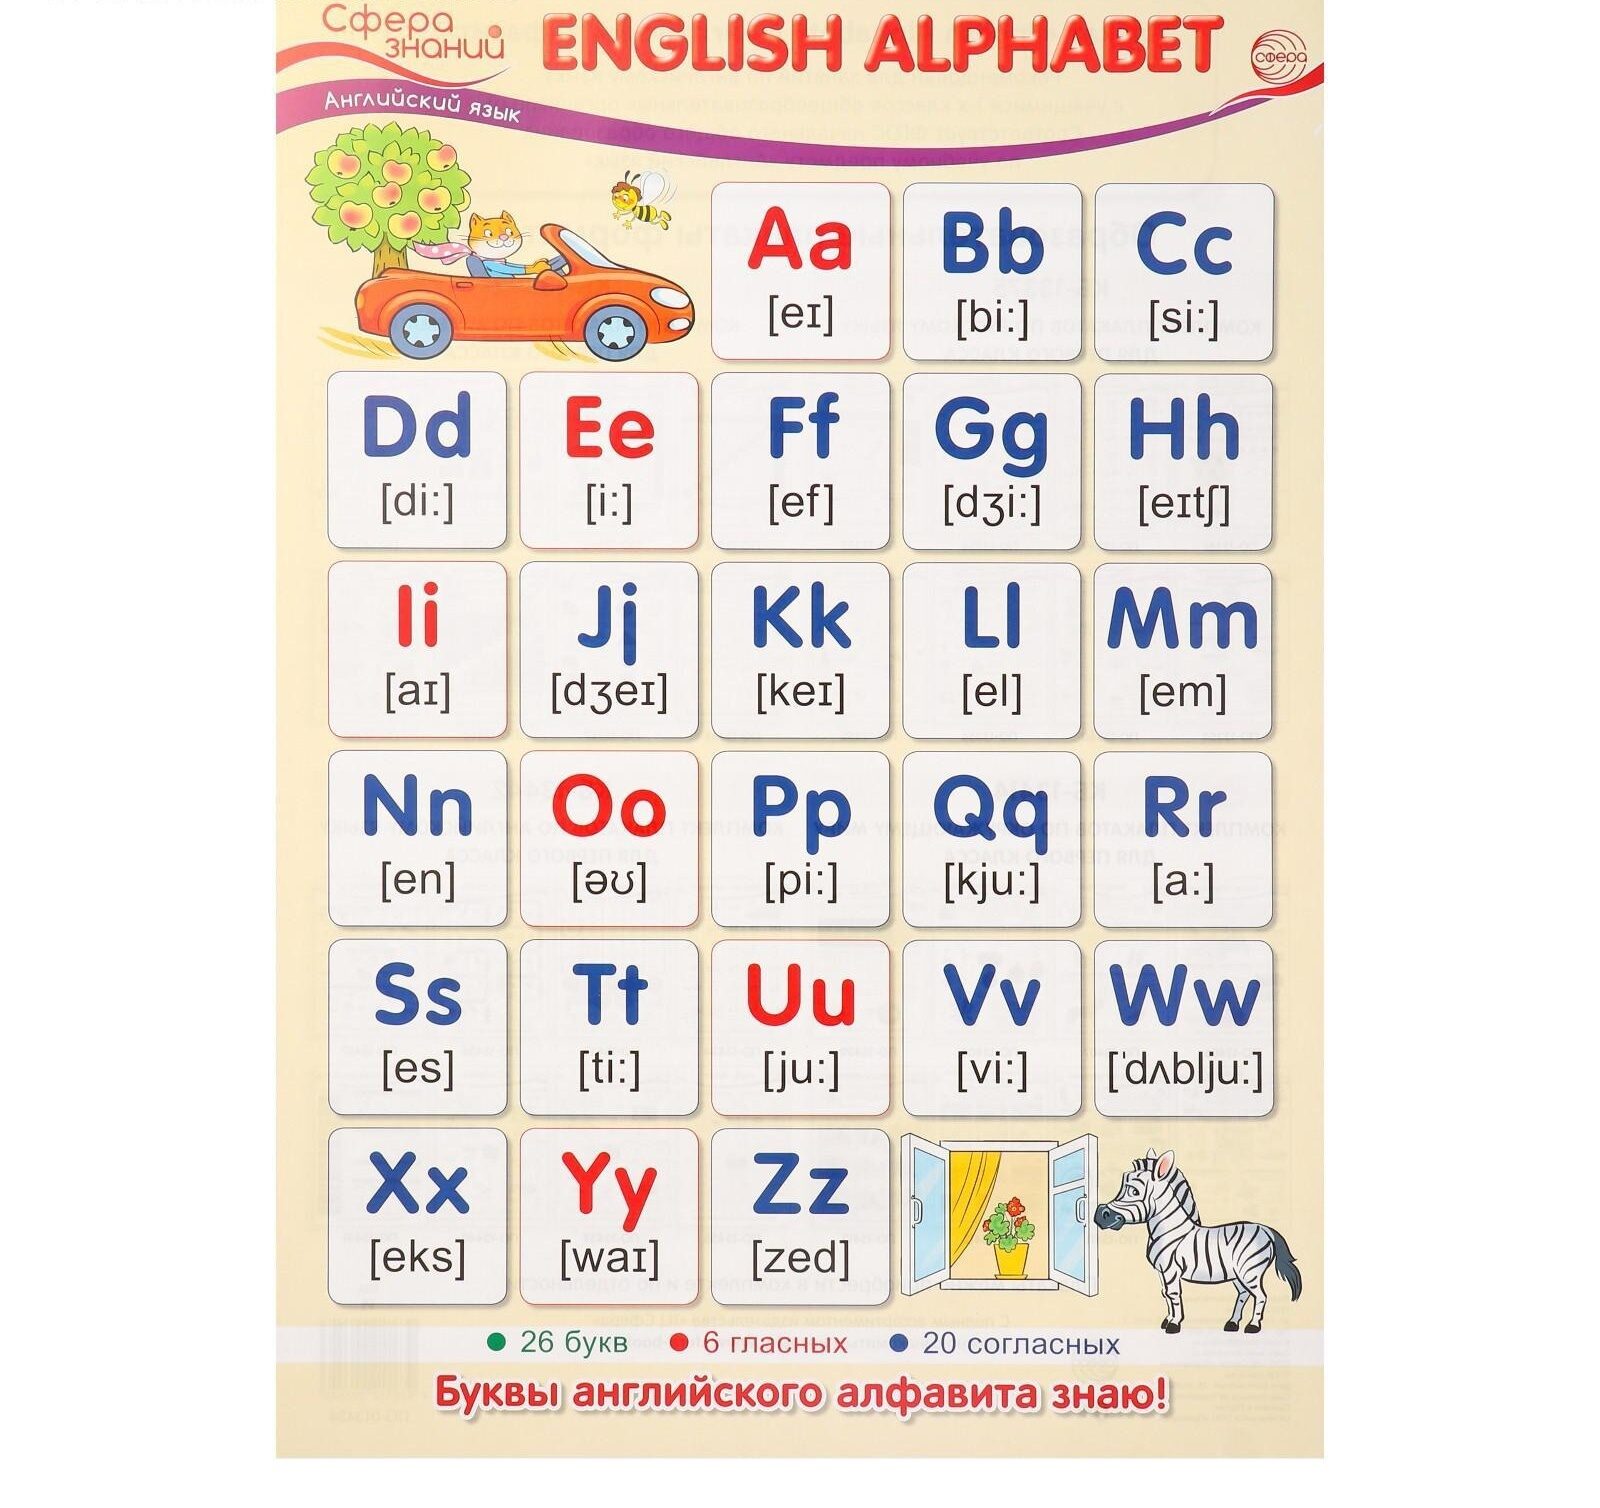 ПЛакат "English Alphabet" А3